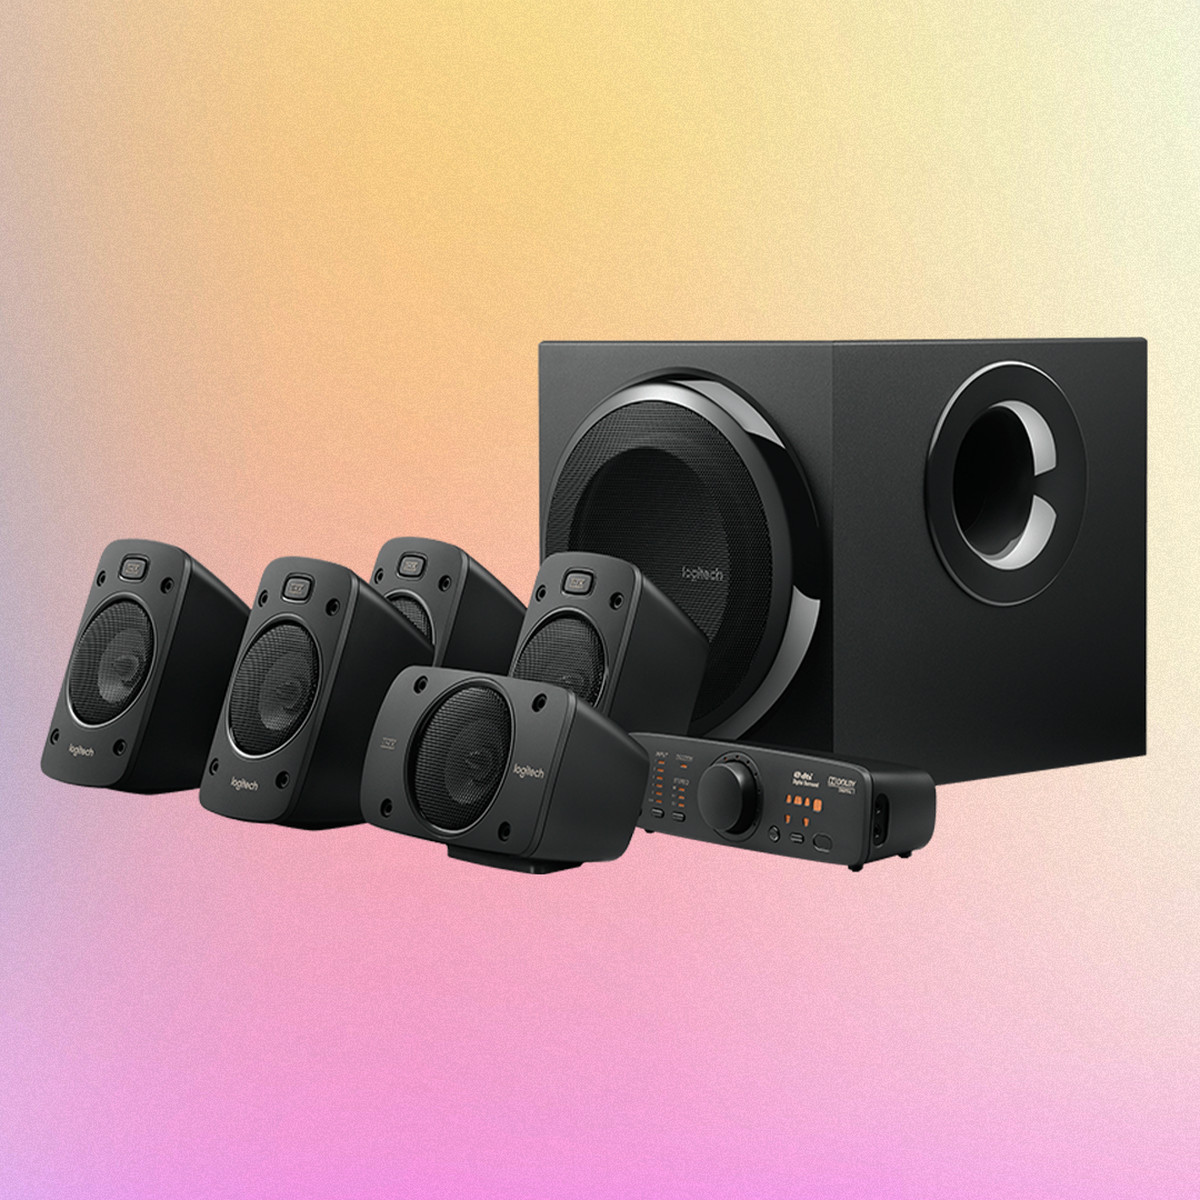 The Logitech surround-sound speaker system on a rainbow background.